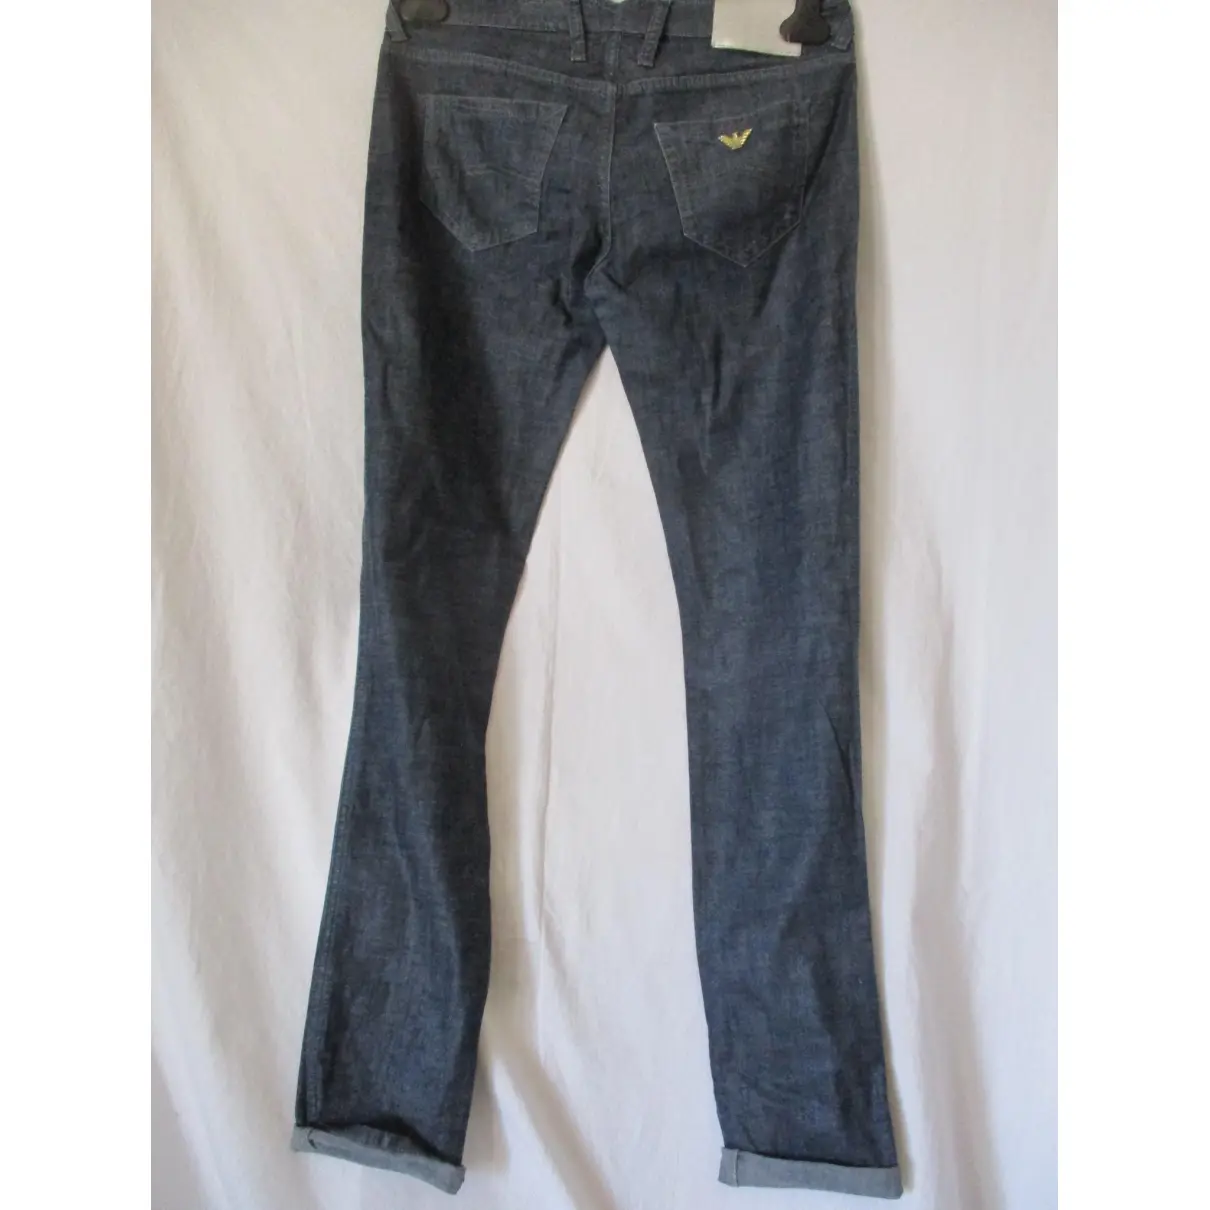 Buy Armani Jeans Blue Denim - Jeans Trousers online